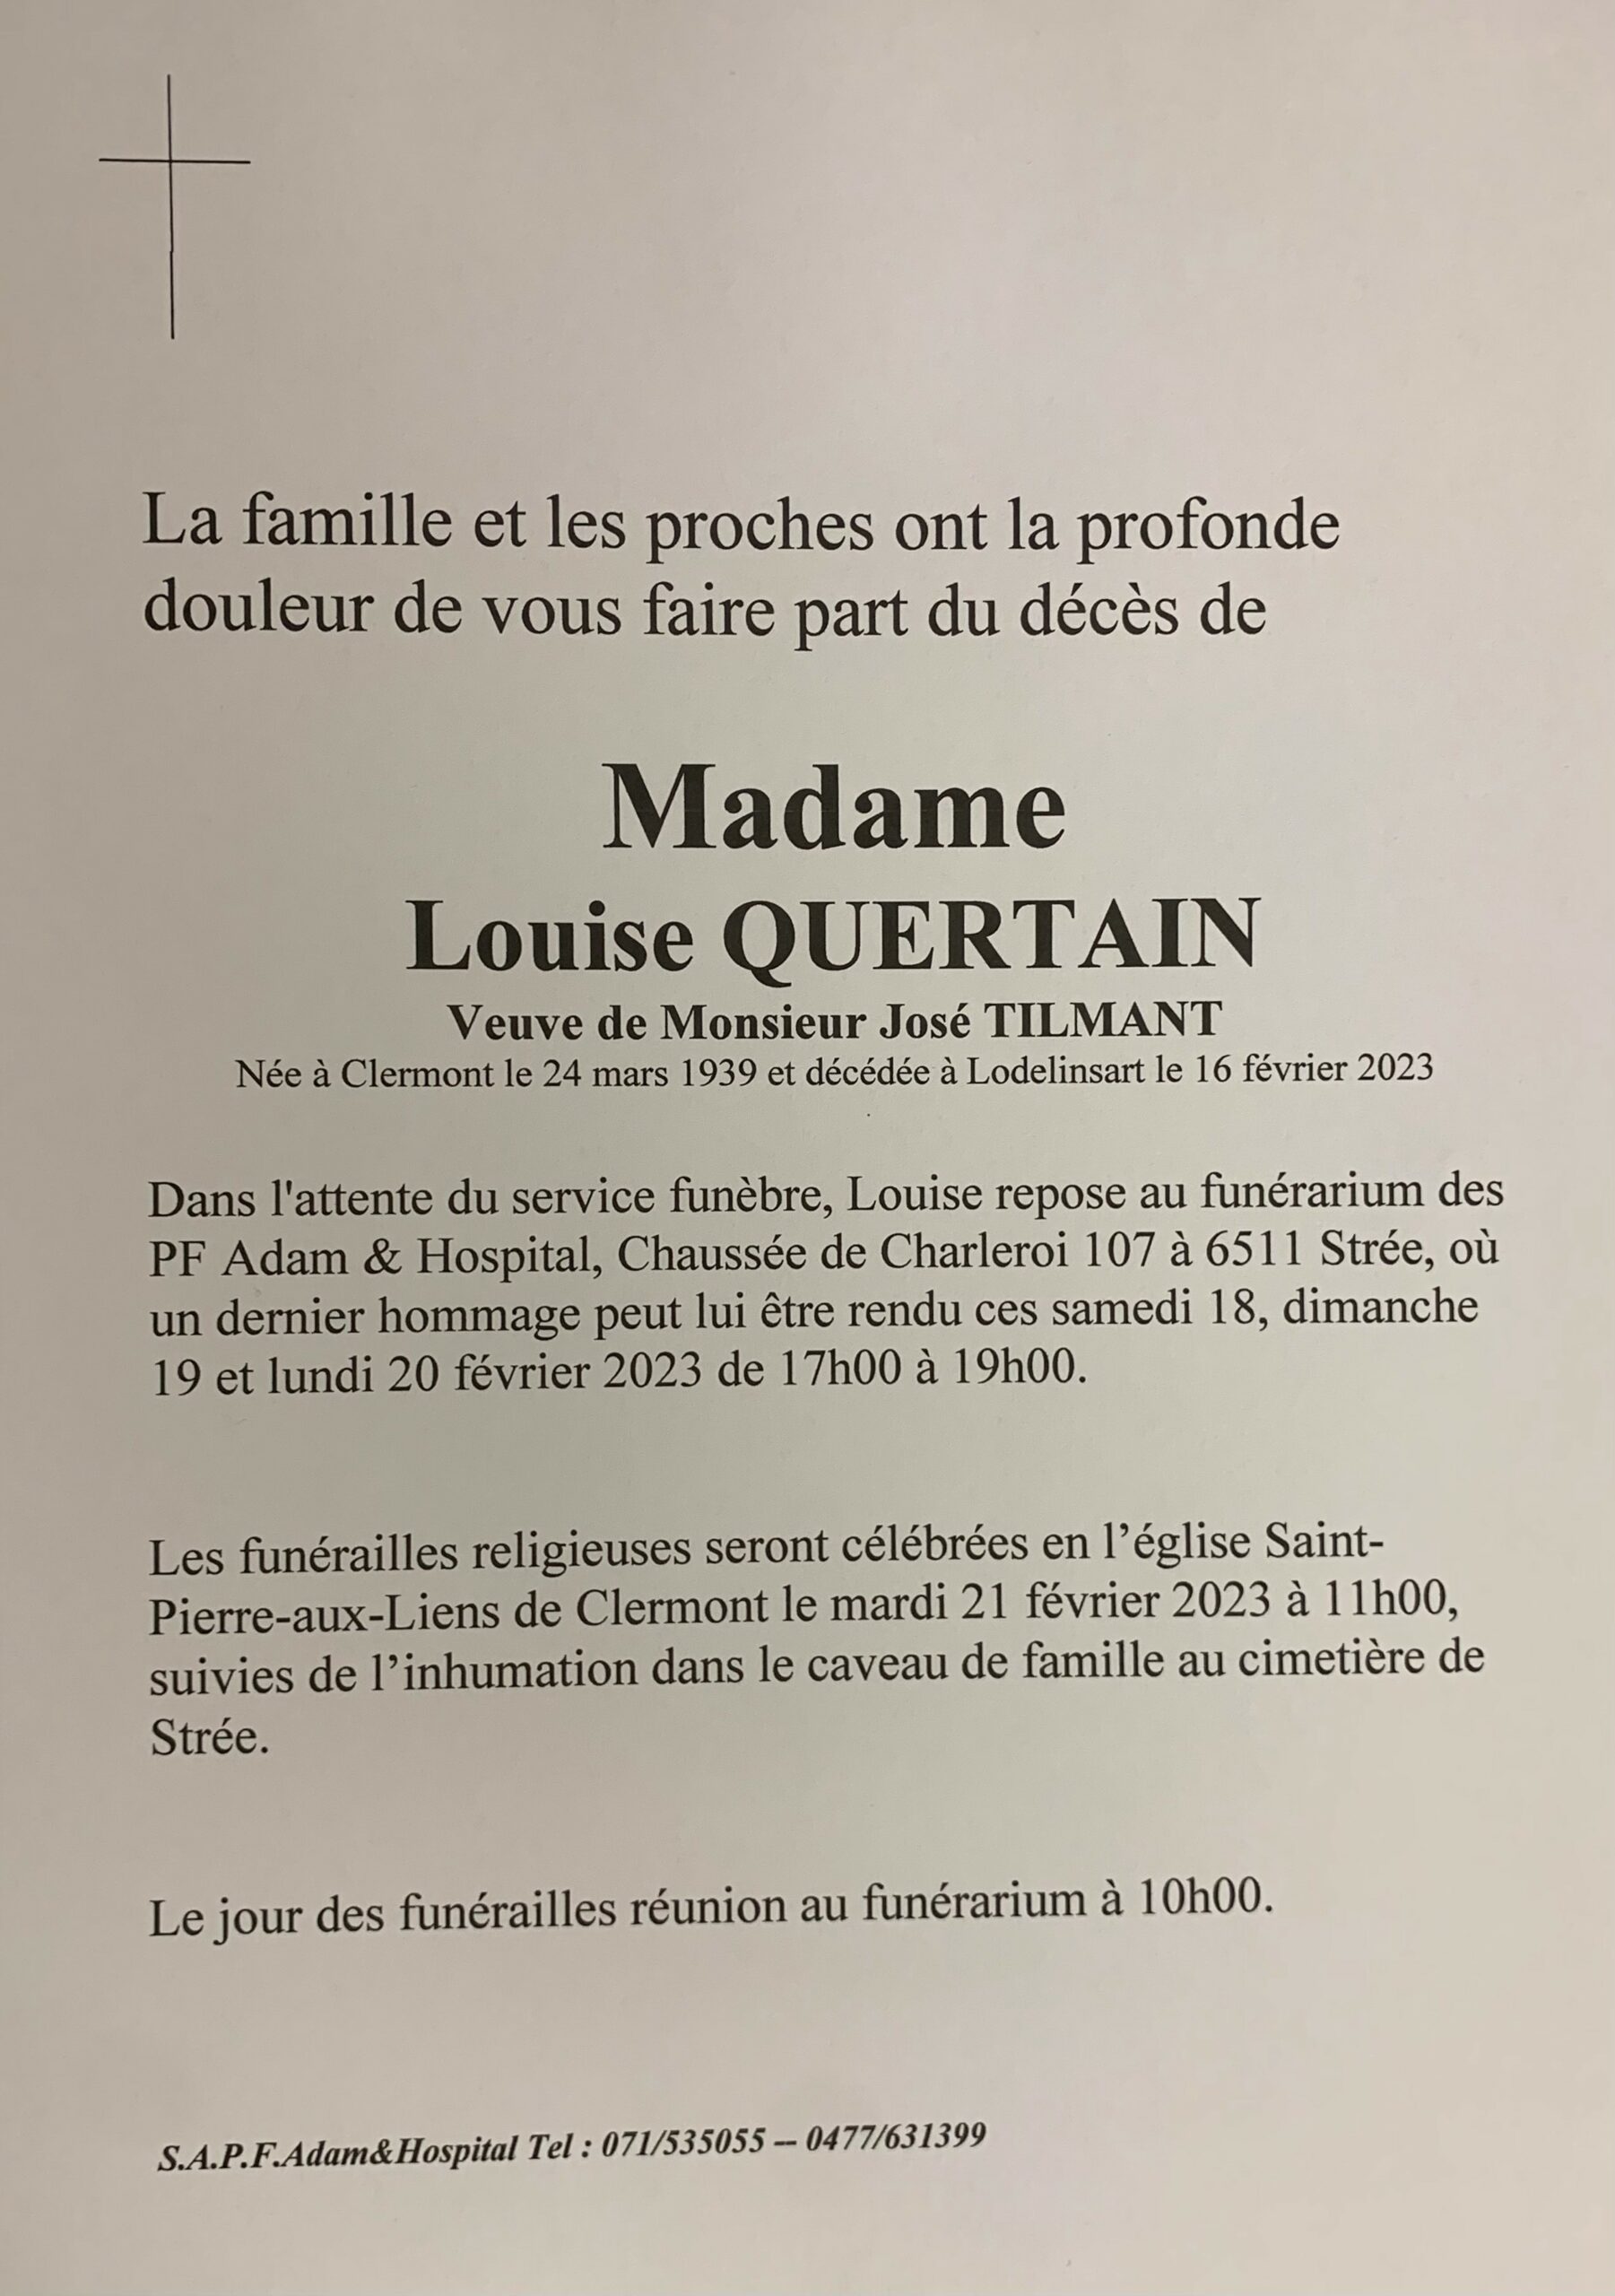 Madame Louise QUERTAIN scaled | Funérailles Adam Hospital